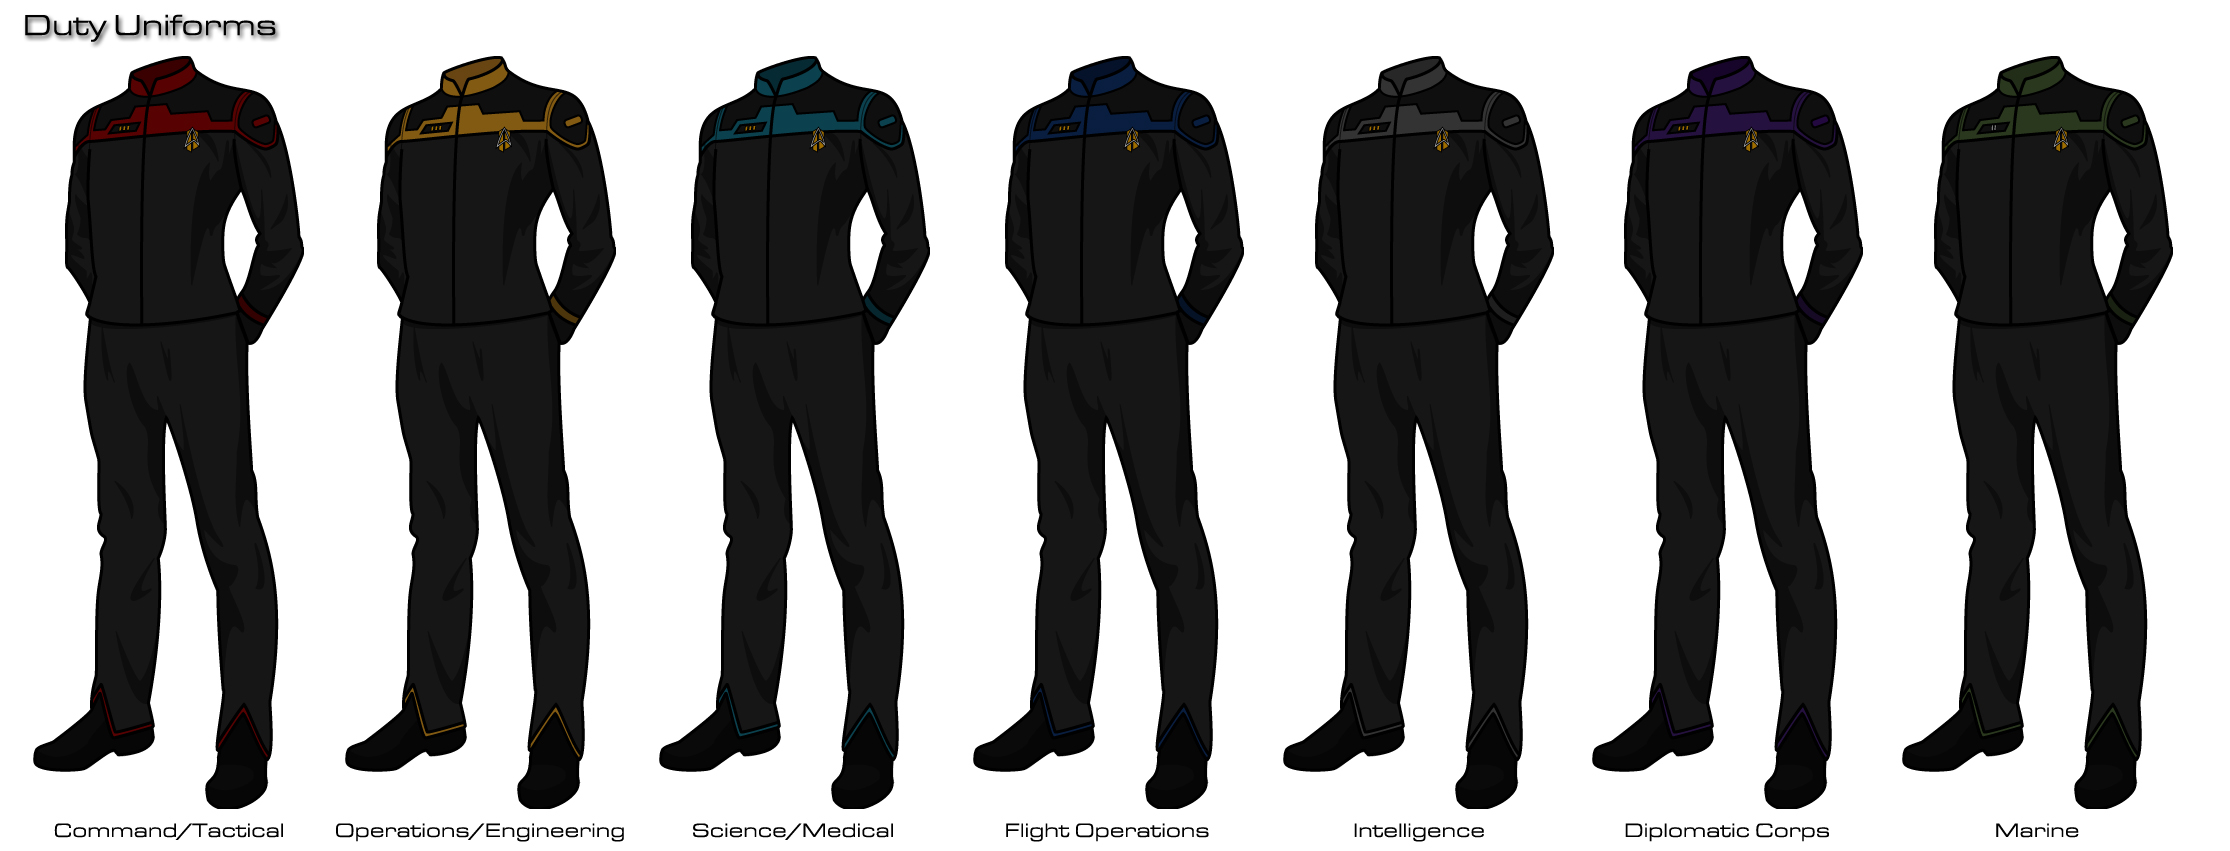 starfleet__2409__uniforms___duty_uniforms_by_haphazartgeek-d7bla8v.jpg